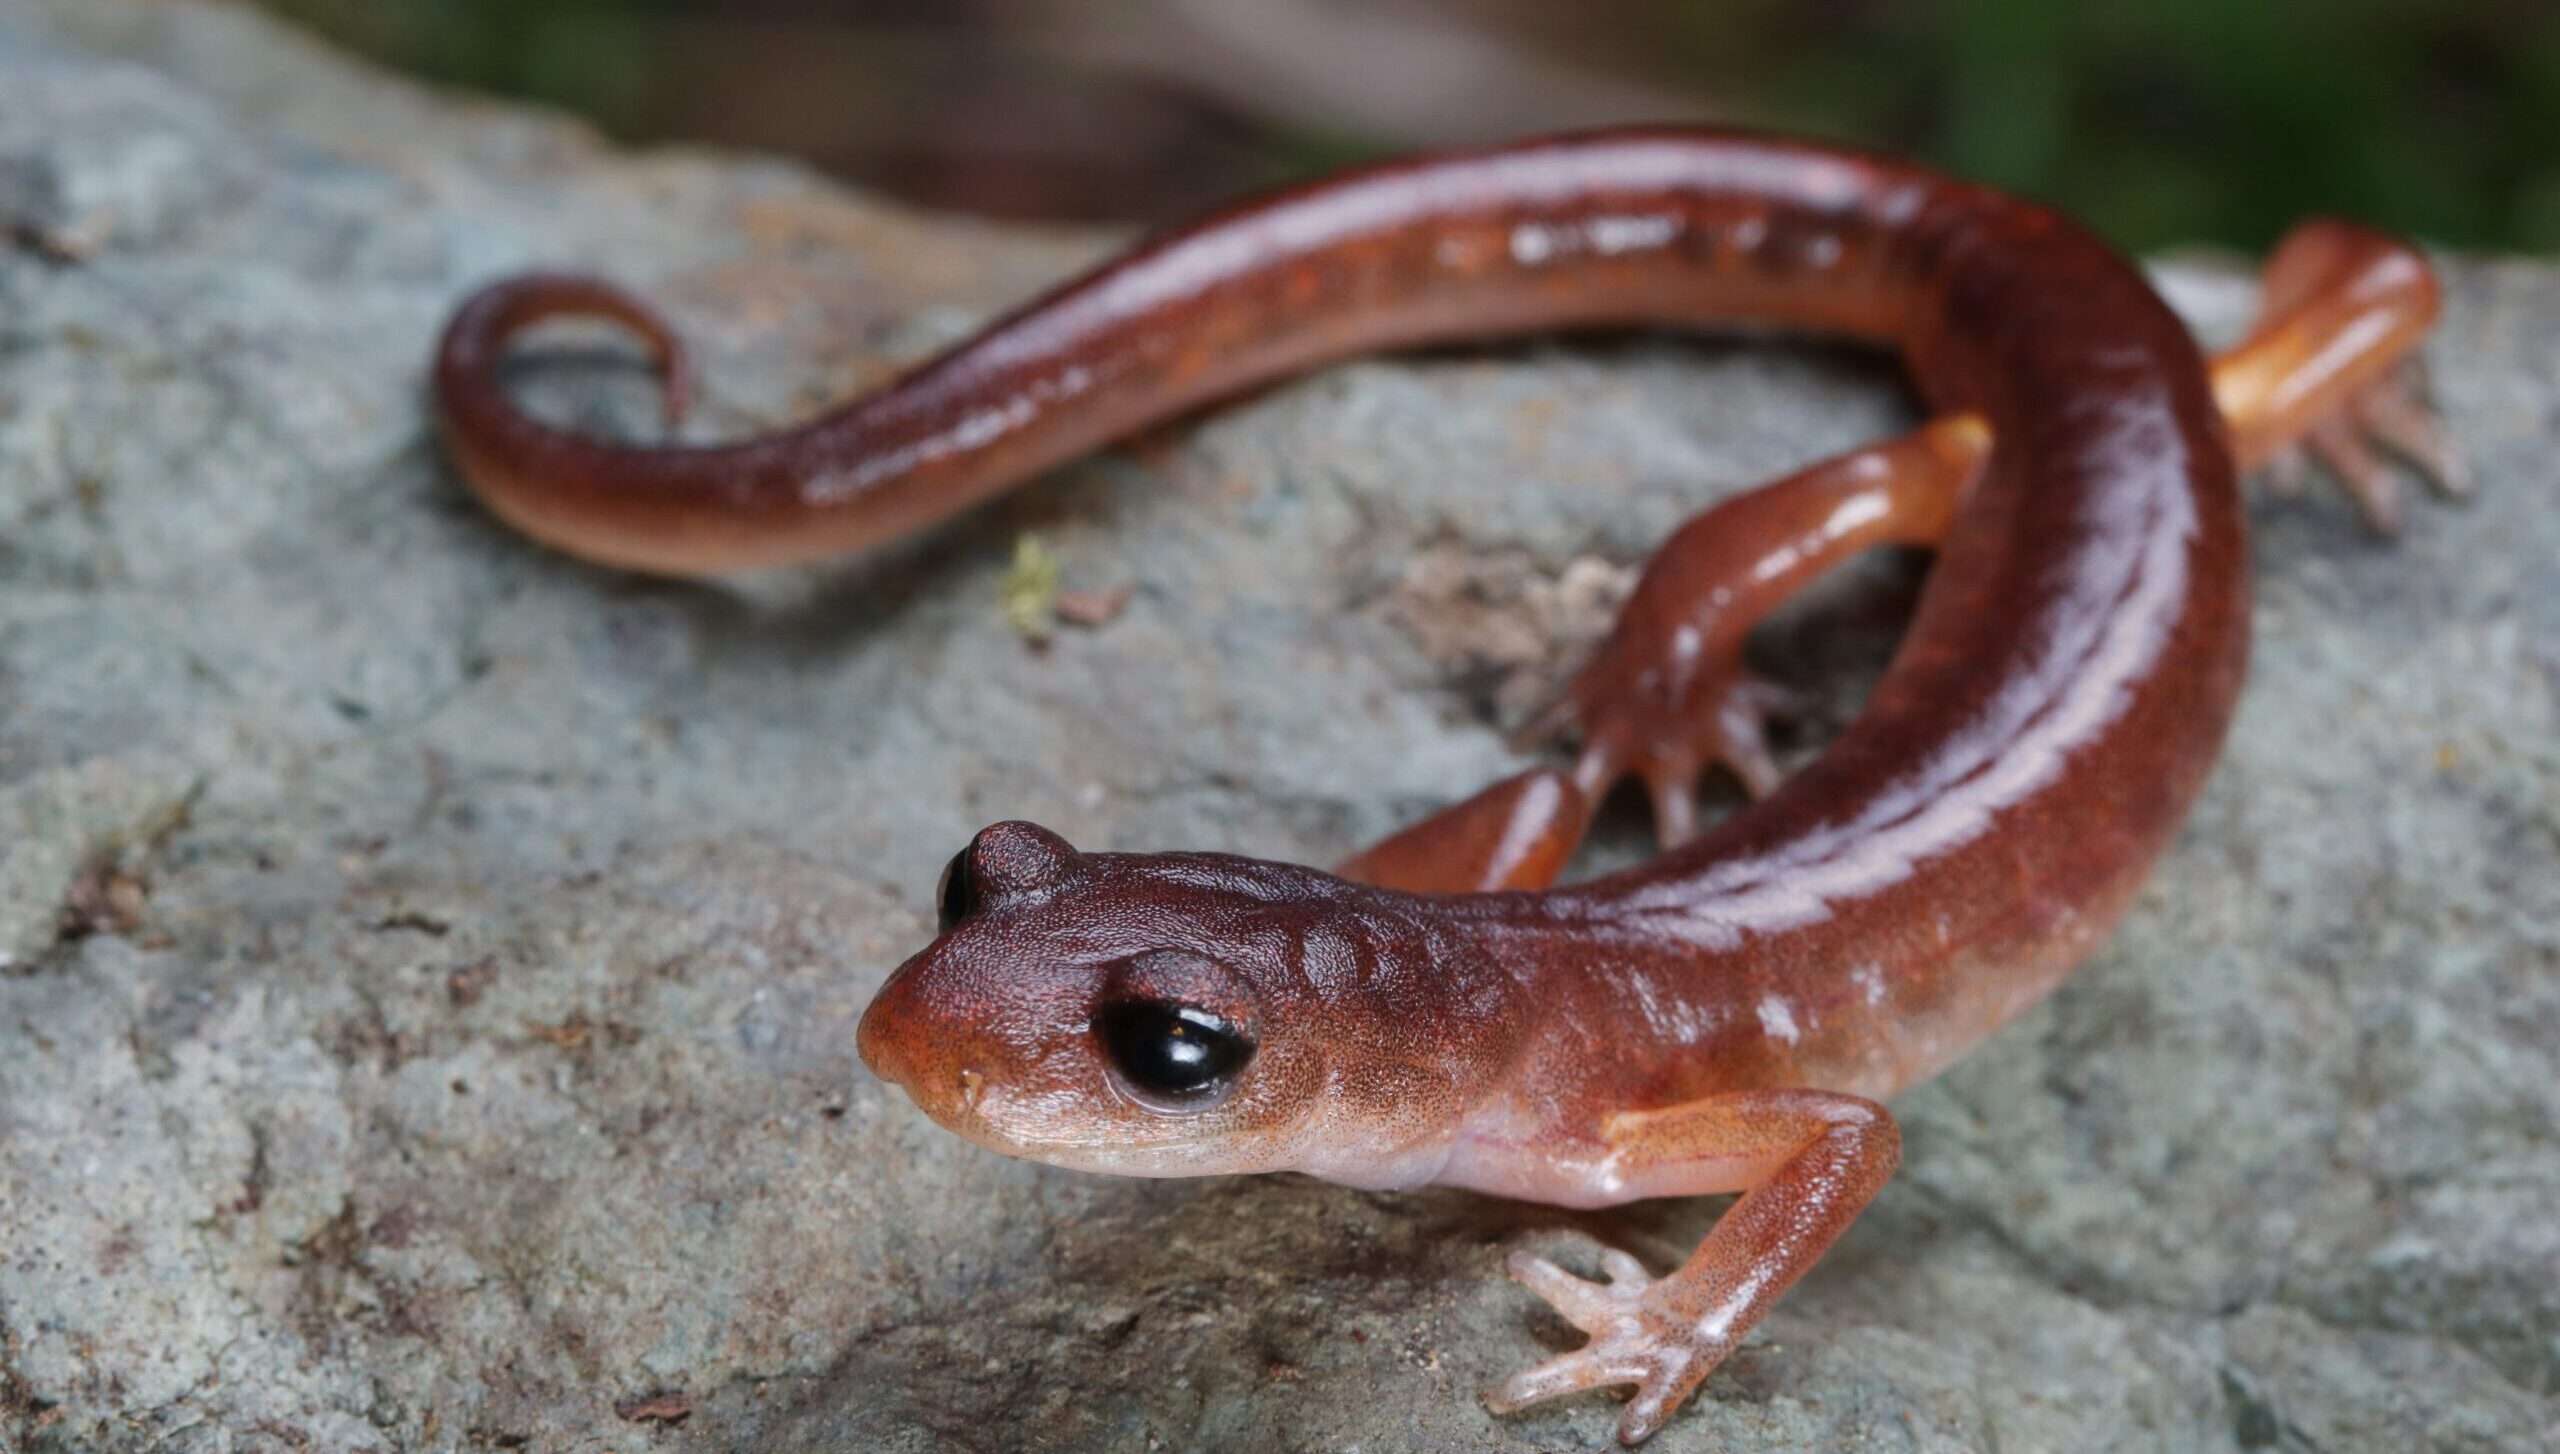 Nehalem River Salamander by Bryce Wade